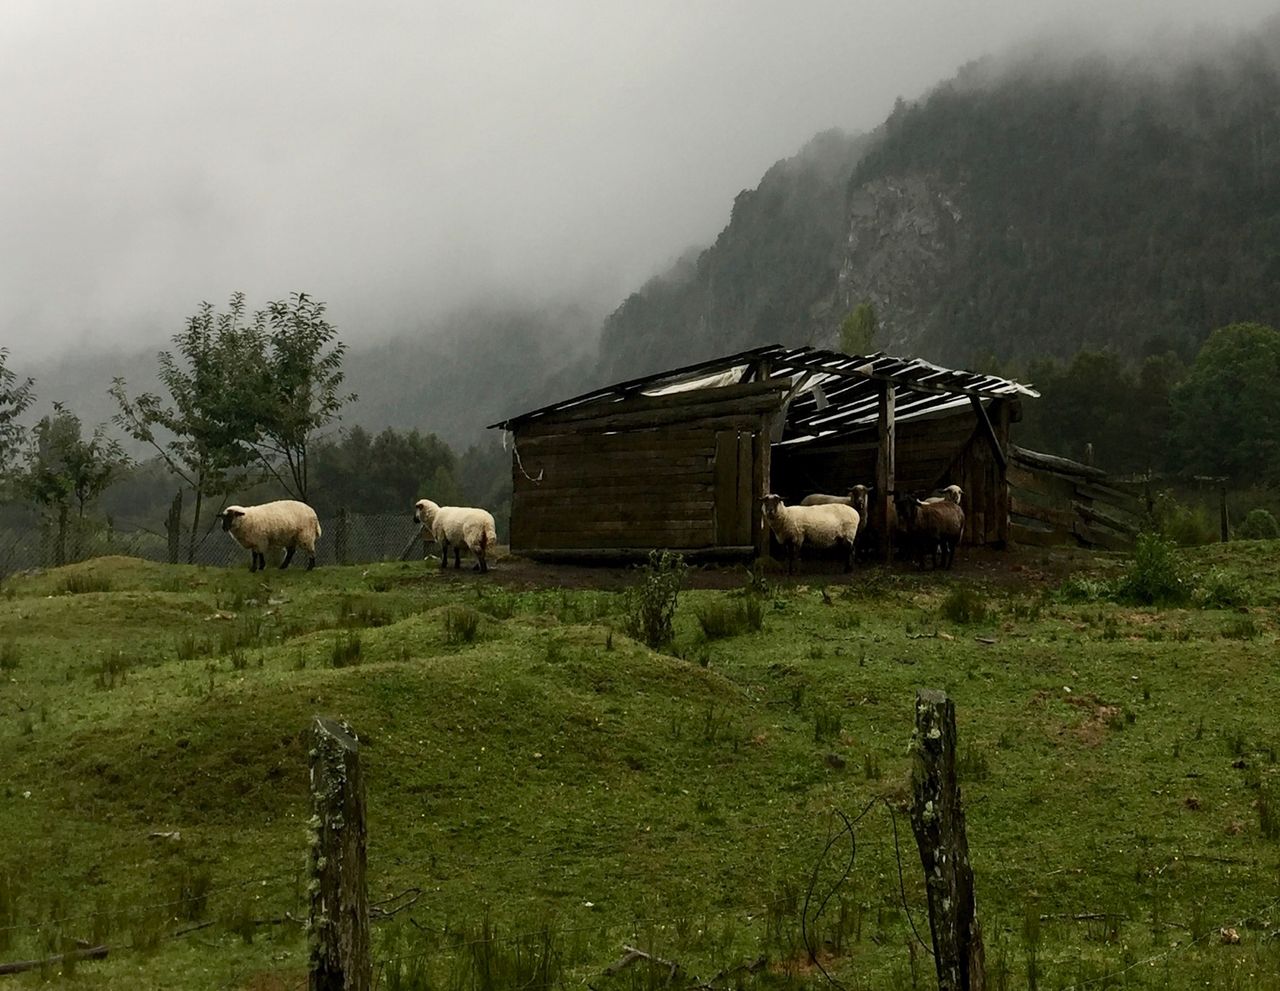 Sheep taking refuge from the rain.